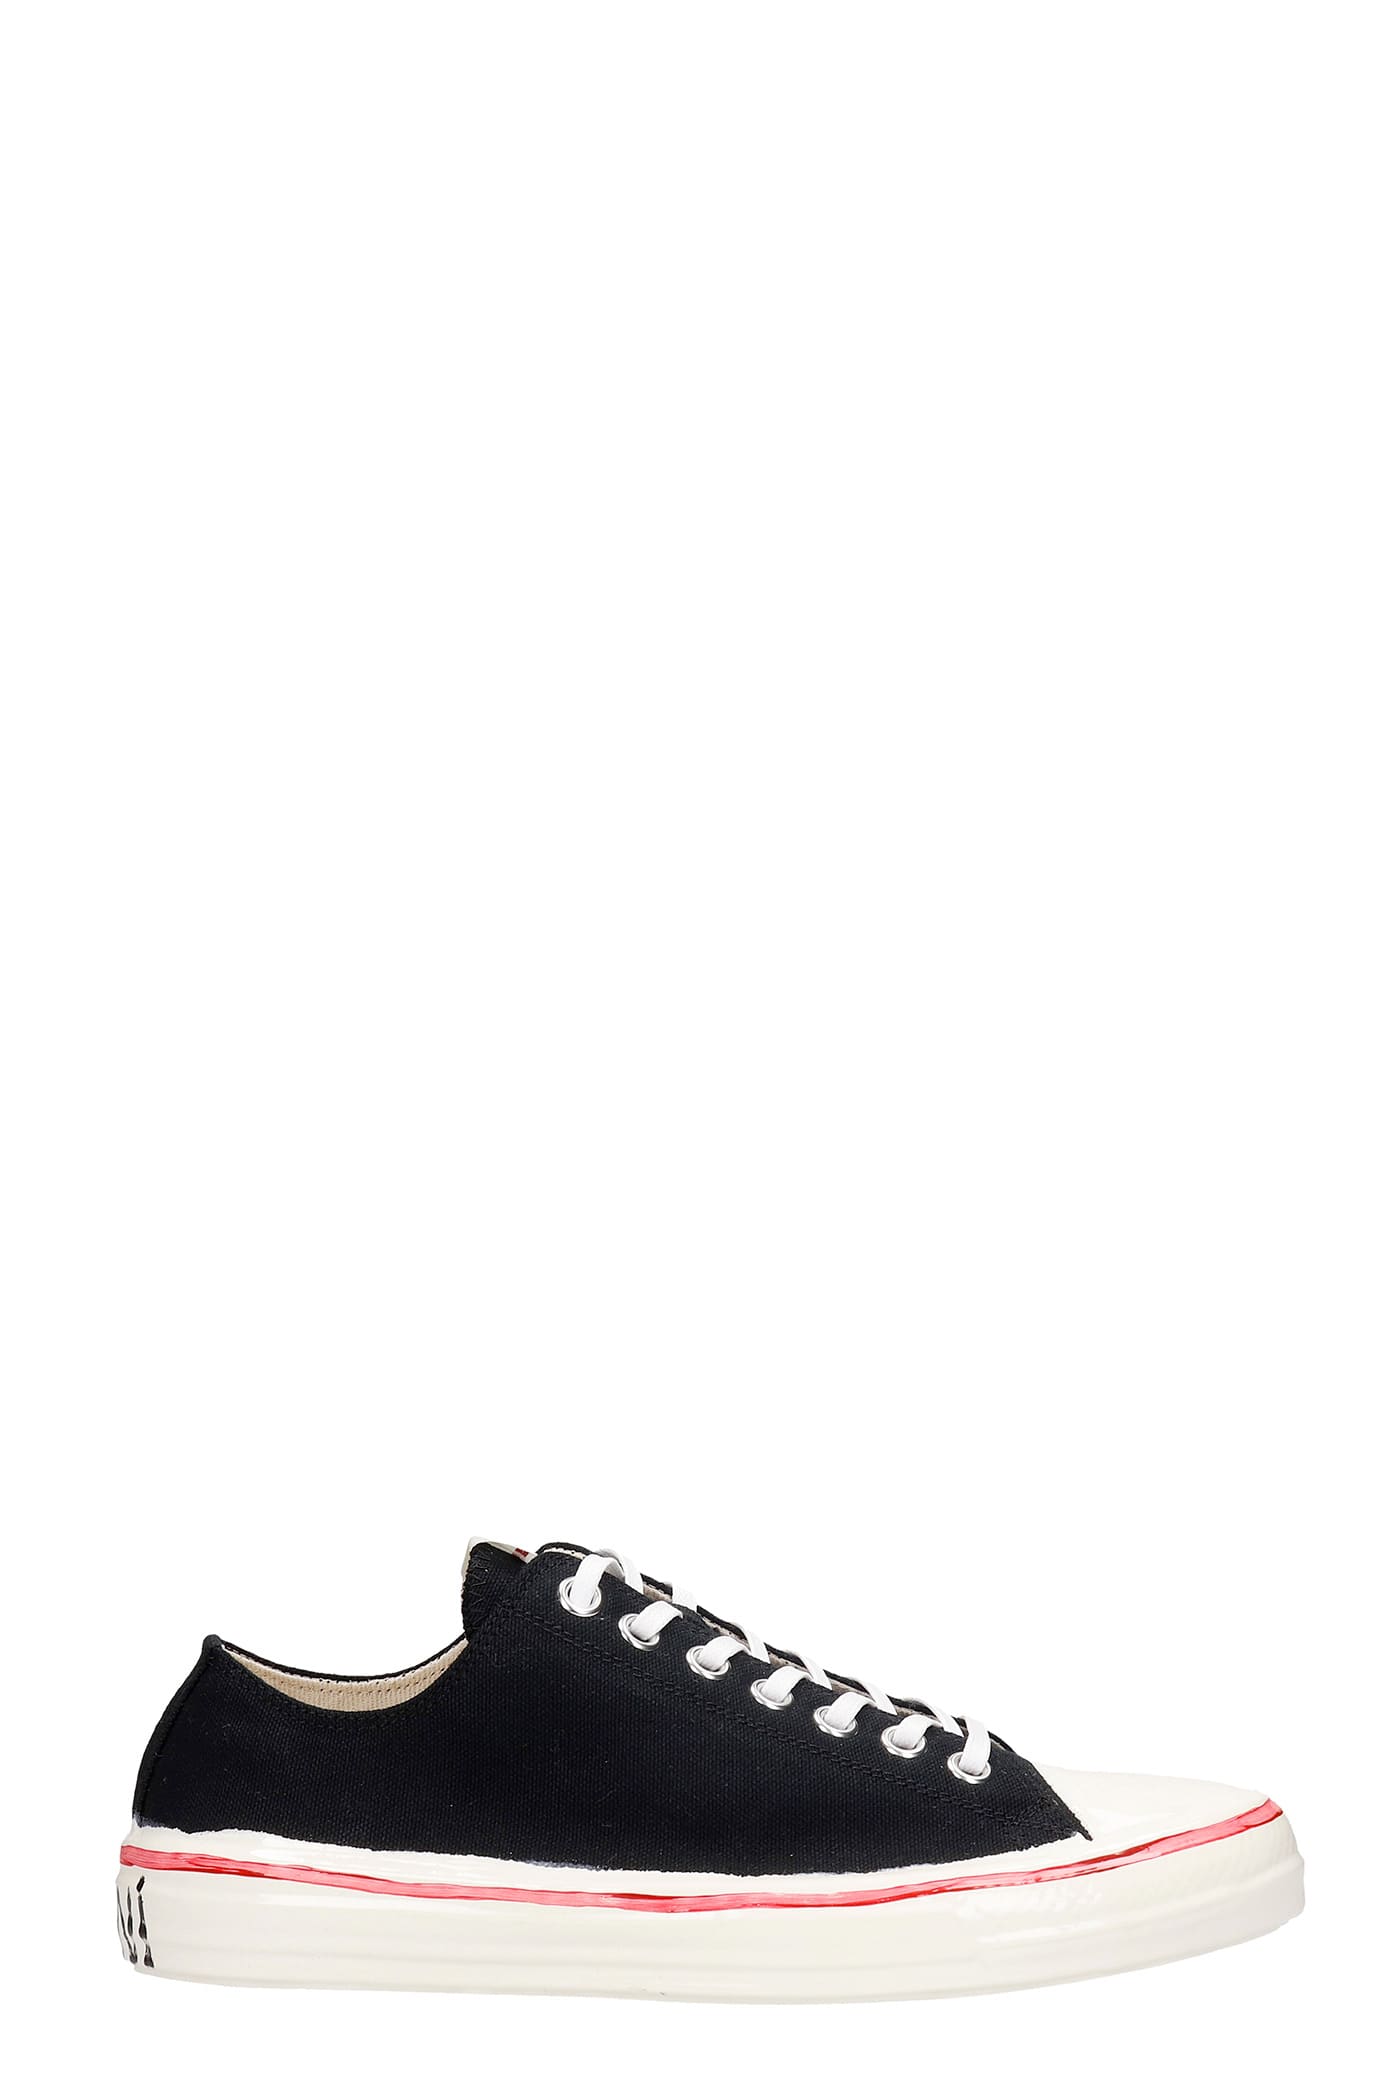 Marni Gooey Sneakers In Black Canvas